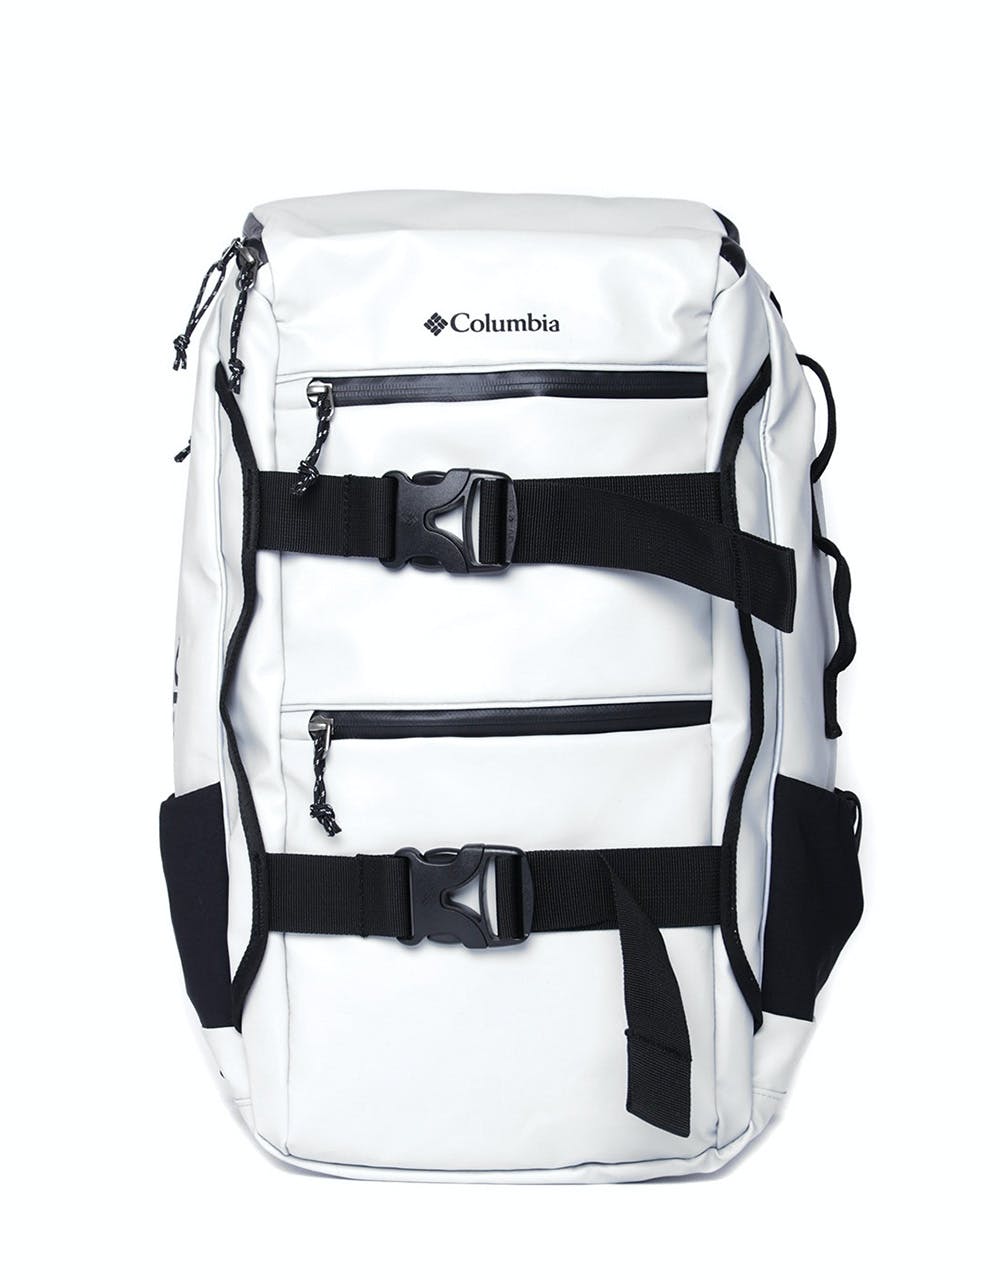 Columbia Street Elite 25L Backpack - Cool Grey